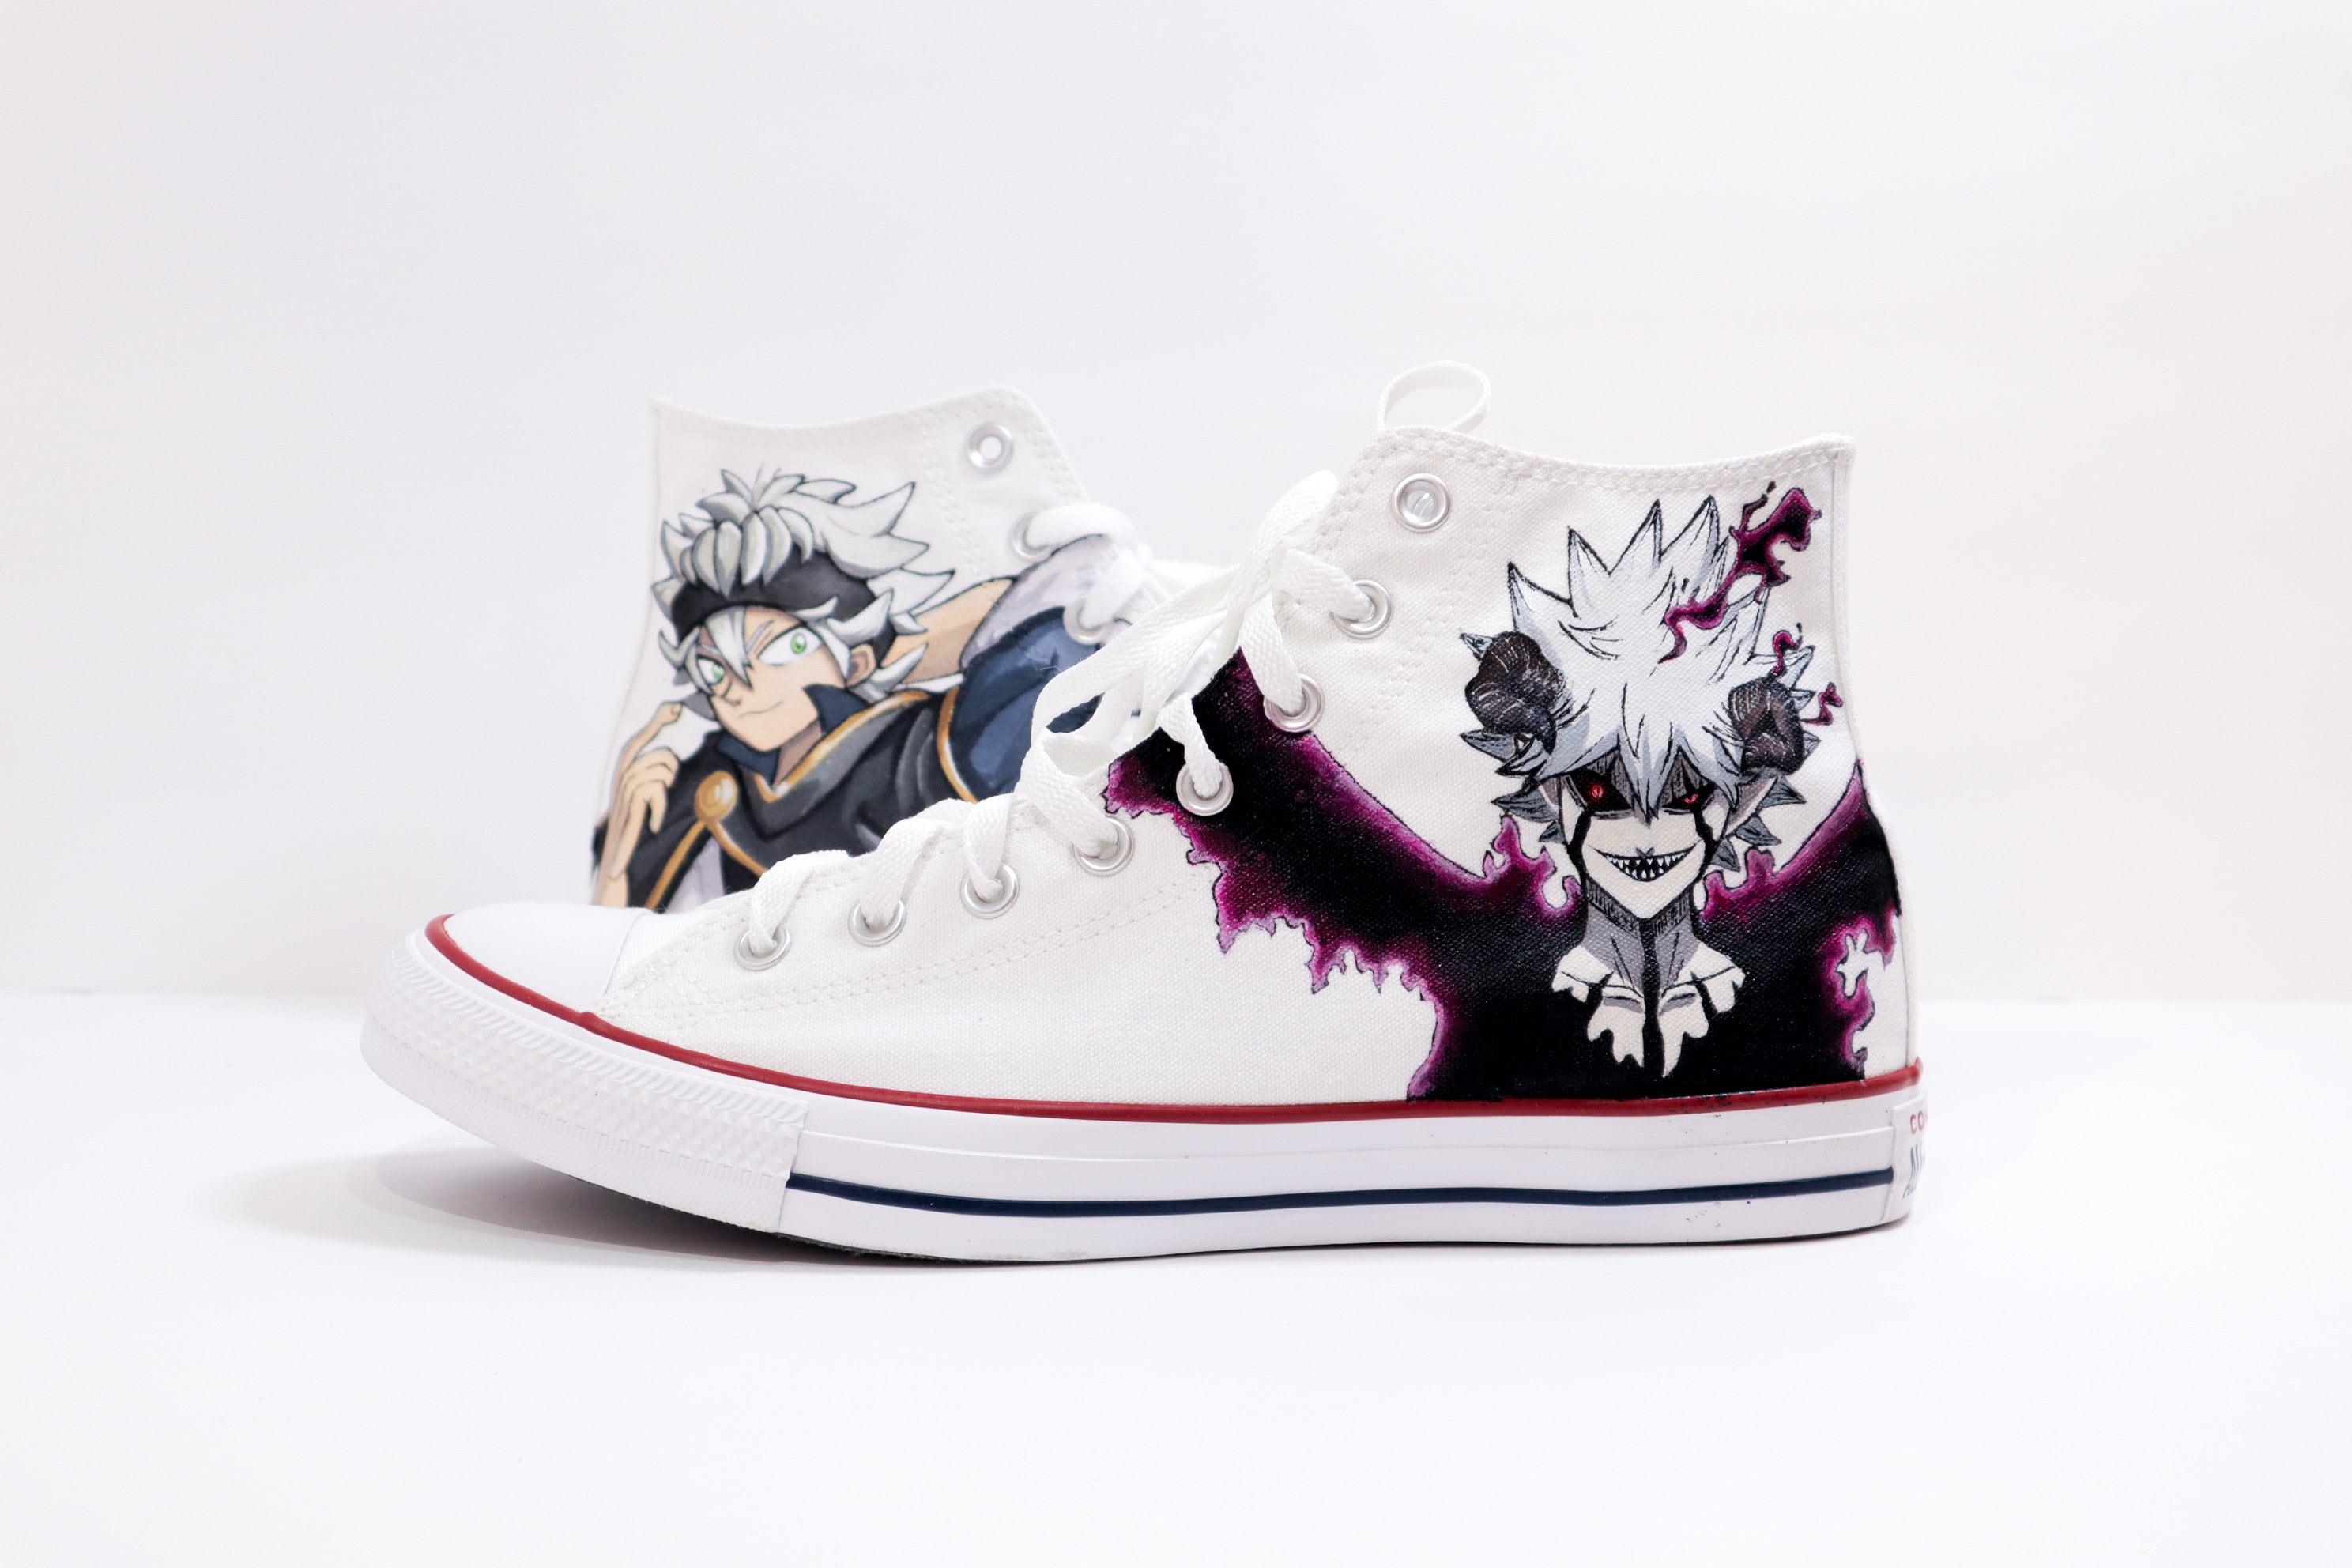 Demon/Fantasy Japanese Anime Converse chaussures B.C. - Etsy France